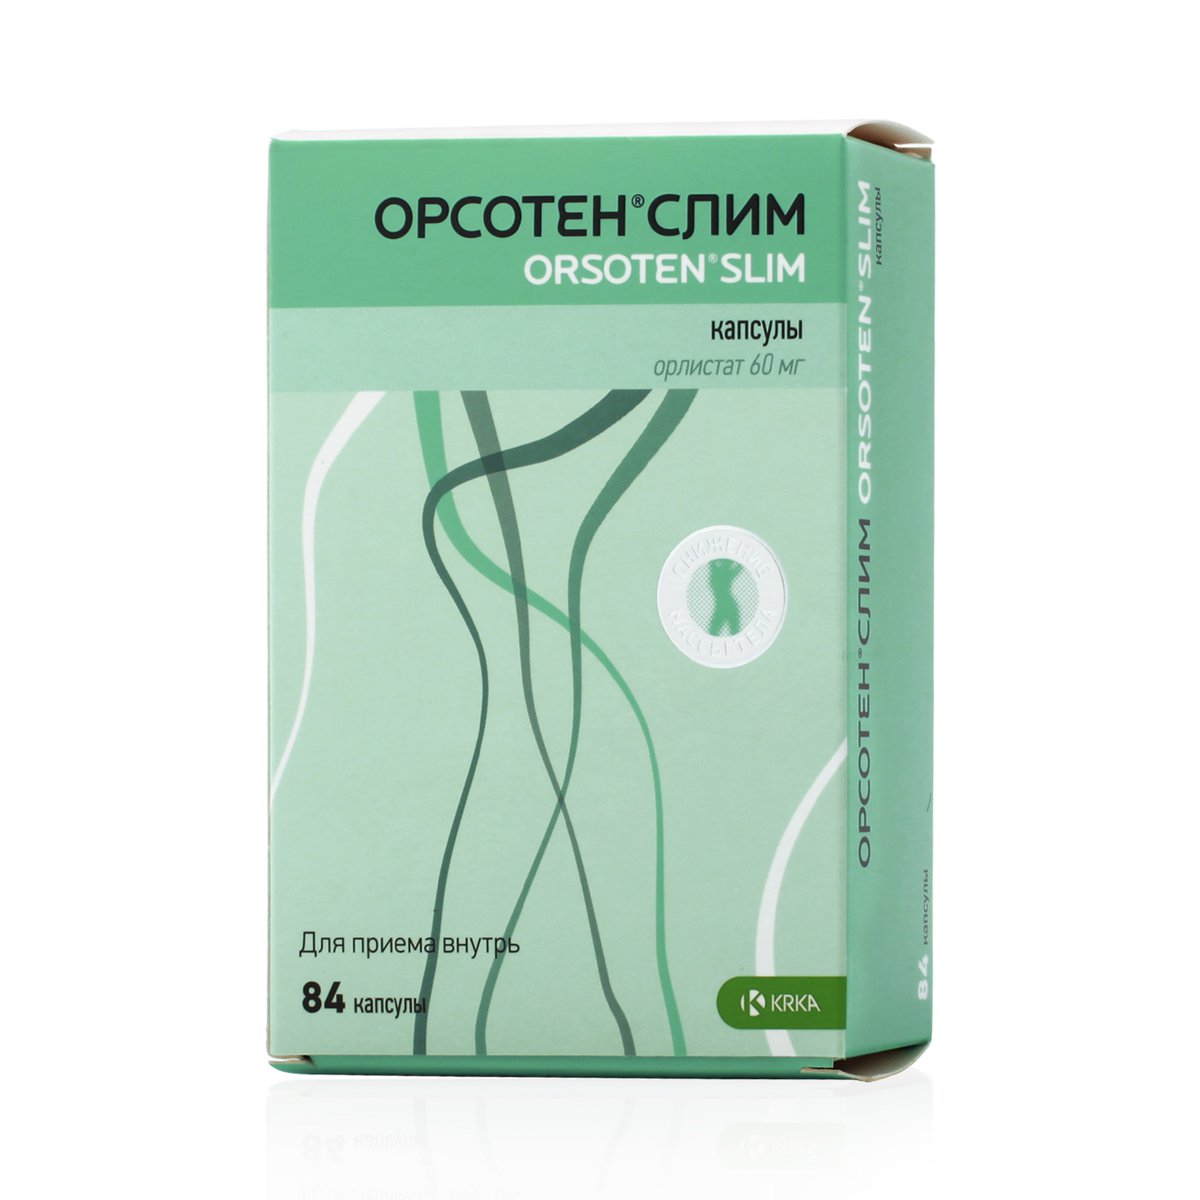 Орсотен слим (капсулы, 84 шт, 60 мг) - цена, купить онлайн в Москве, описан...